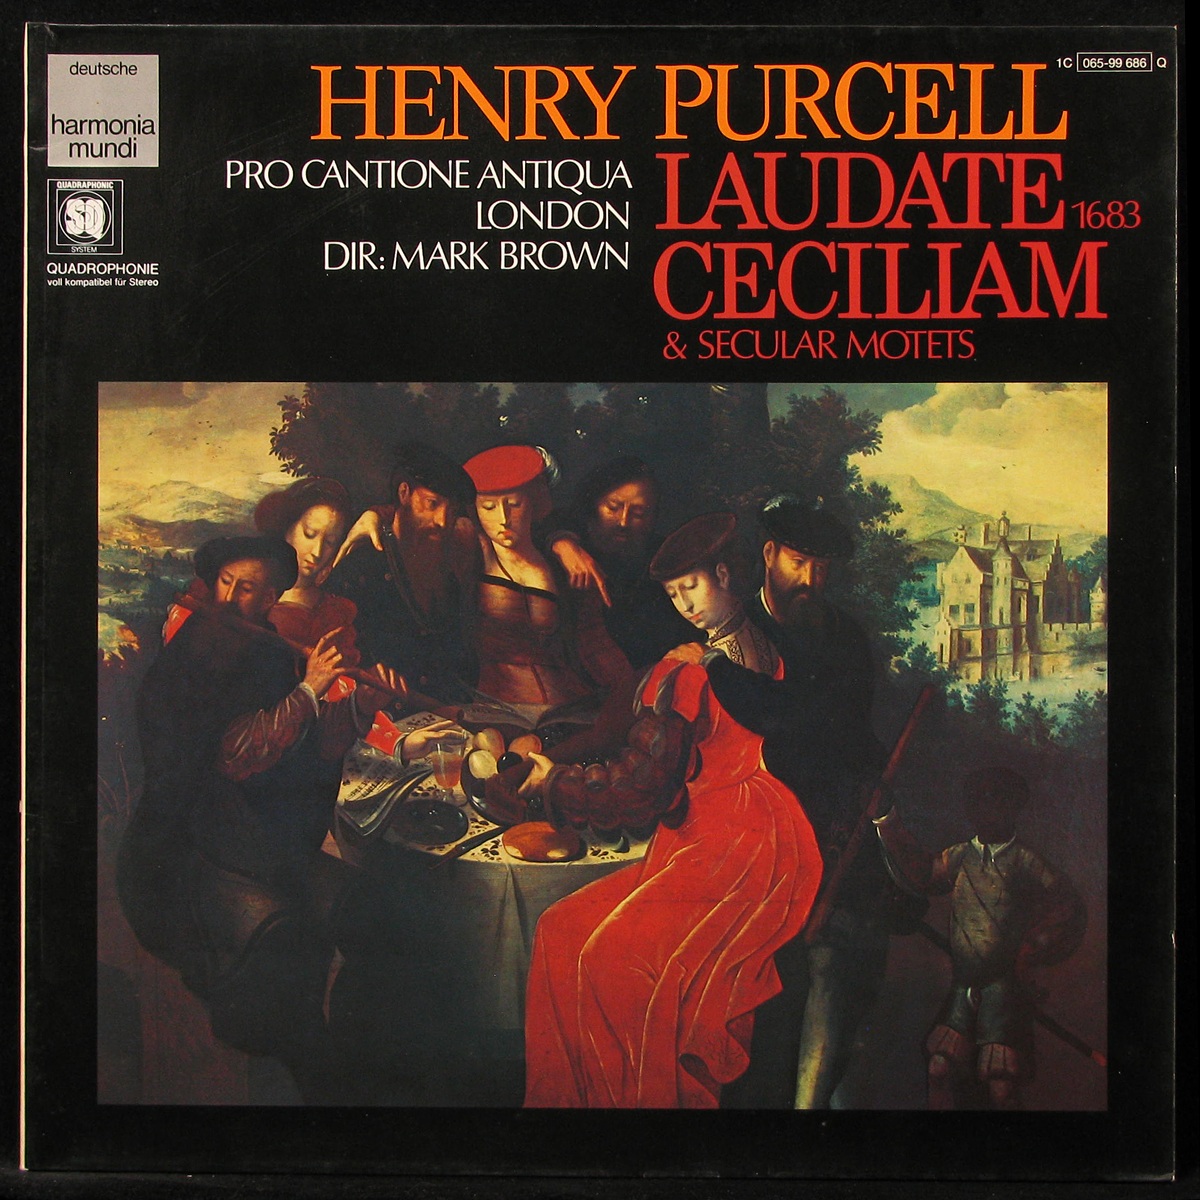 LP Pro Cantione Antiqua — Purcell: Laudate Ceciliam & Secular Motets (Quadro) фото